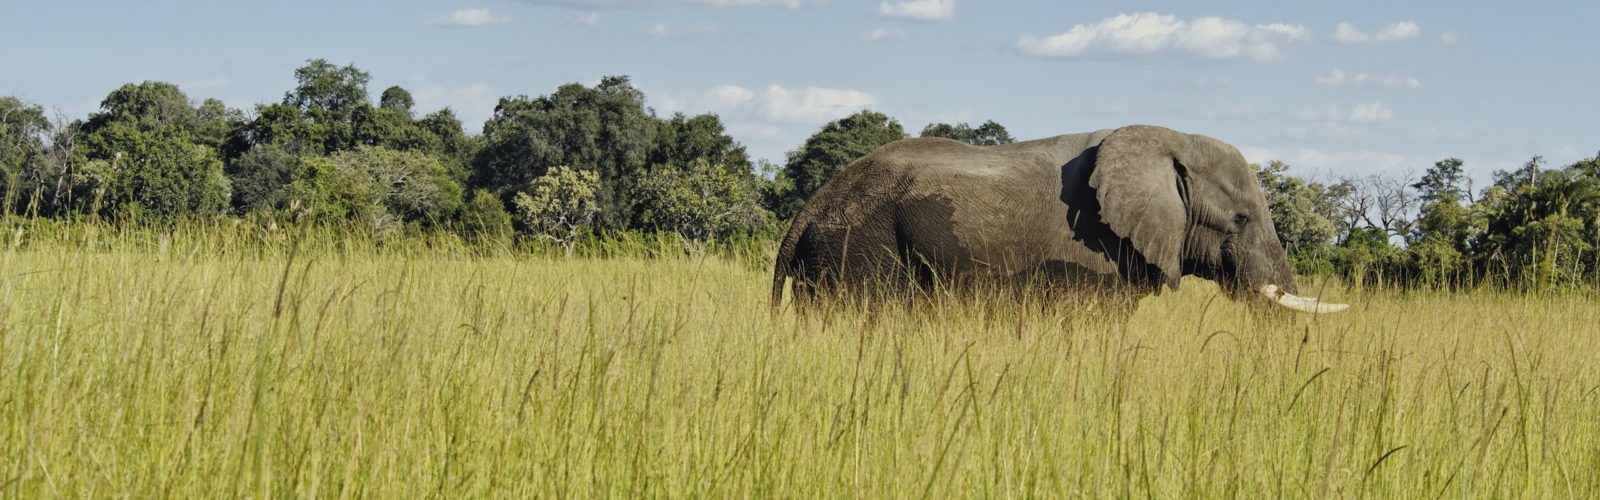 Elephant walking in the grass, Botswana